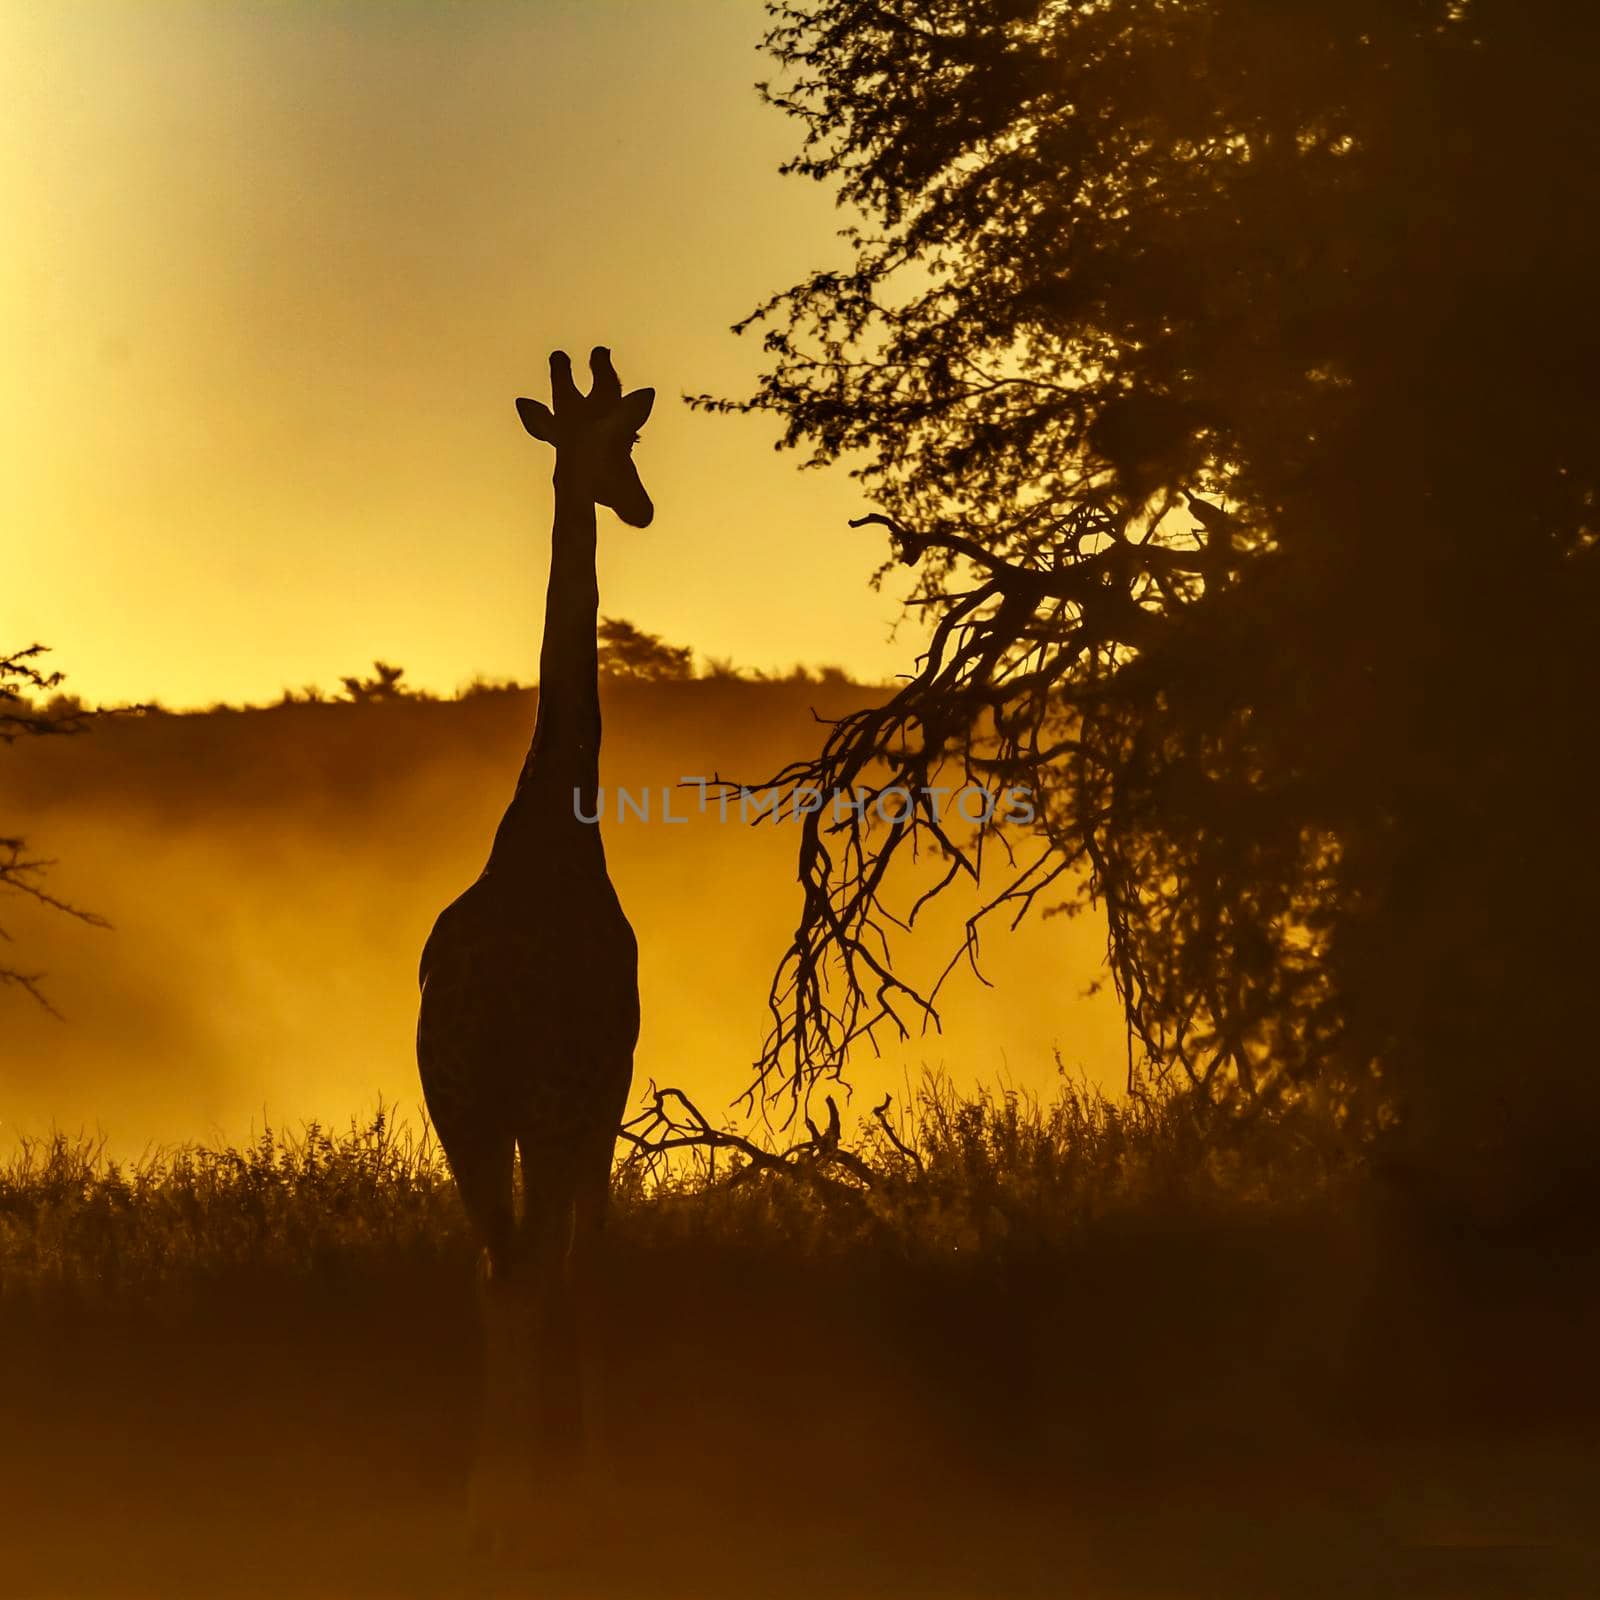 Giraffe front view at sunset in Kgalagadi transfrontier park, South Africa ; Specie Giraffa camelopardalis family of Giraffidae